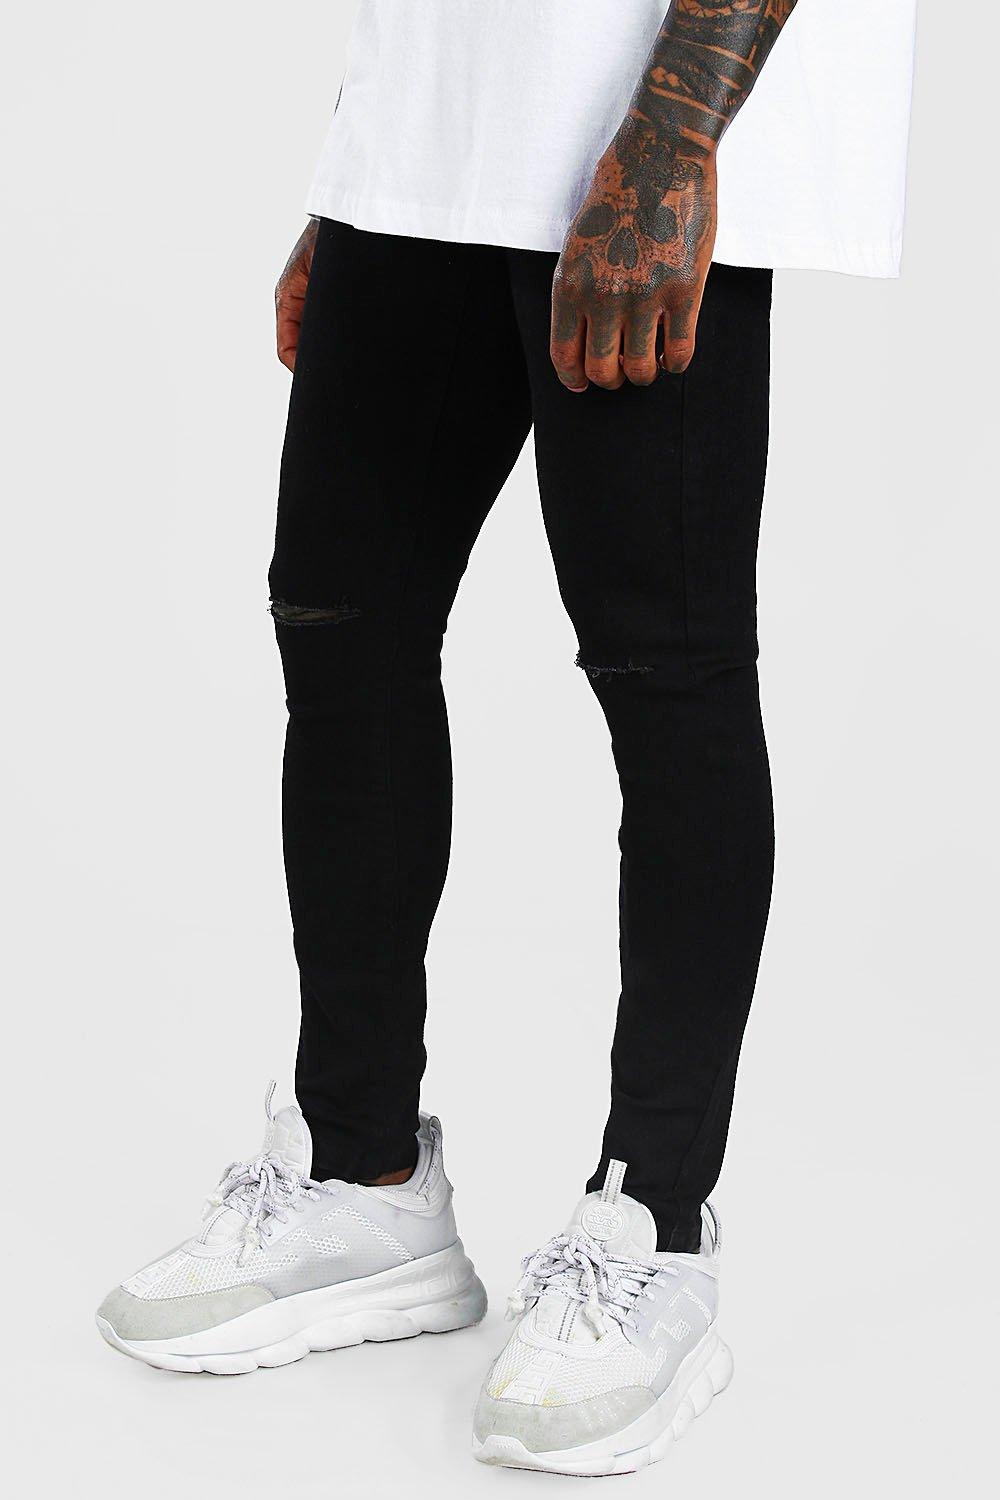 black skinny jeans with slits in knees